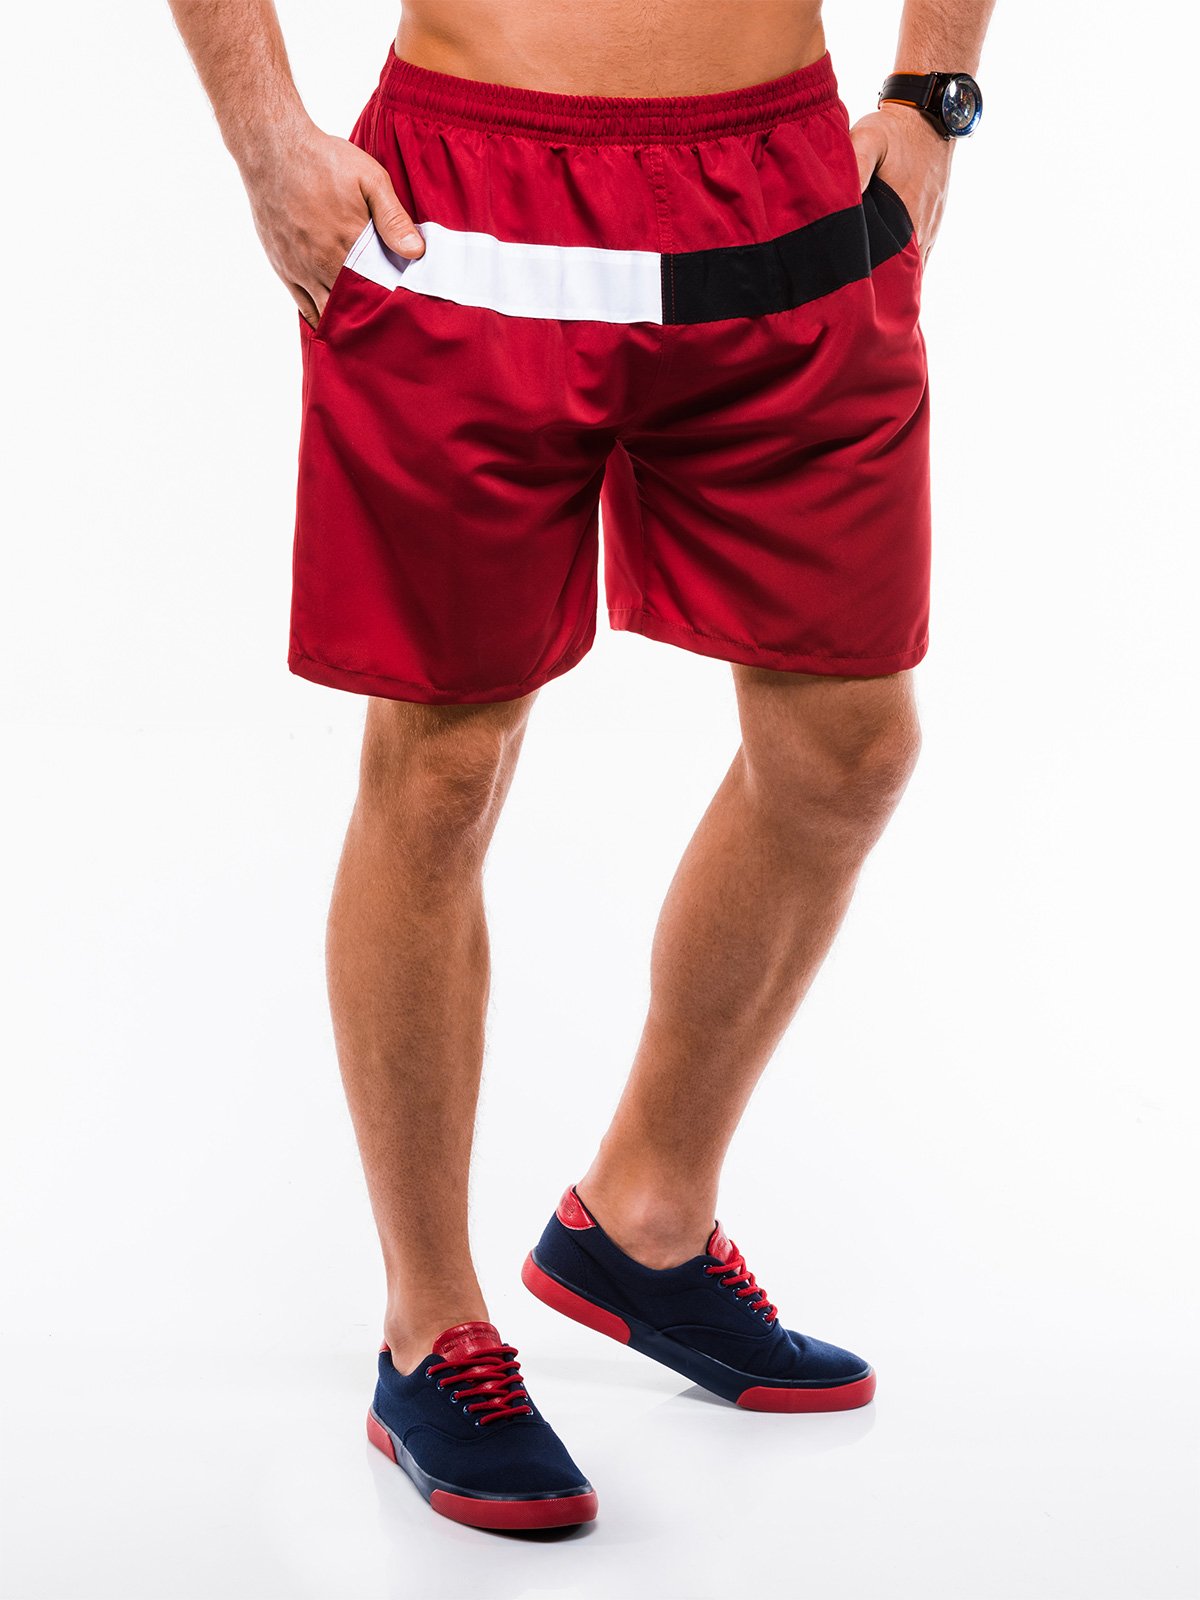 Men's shorts W191 - dark red | MODONE wholesale - Clothing For Men